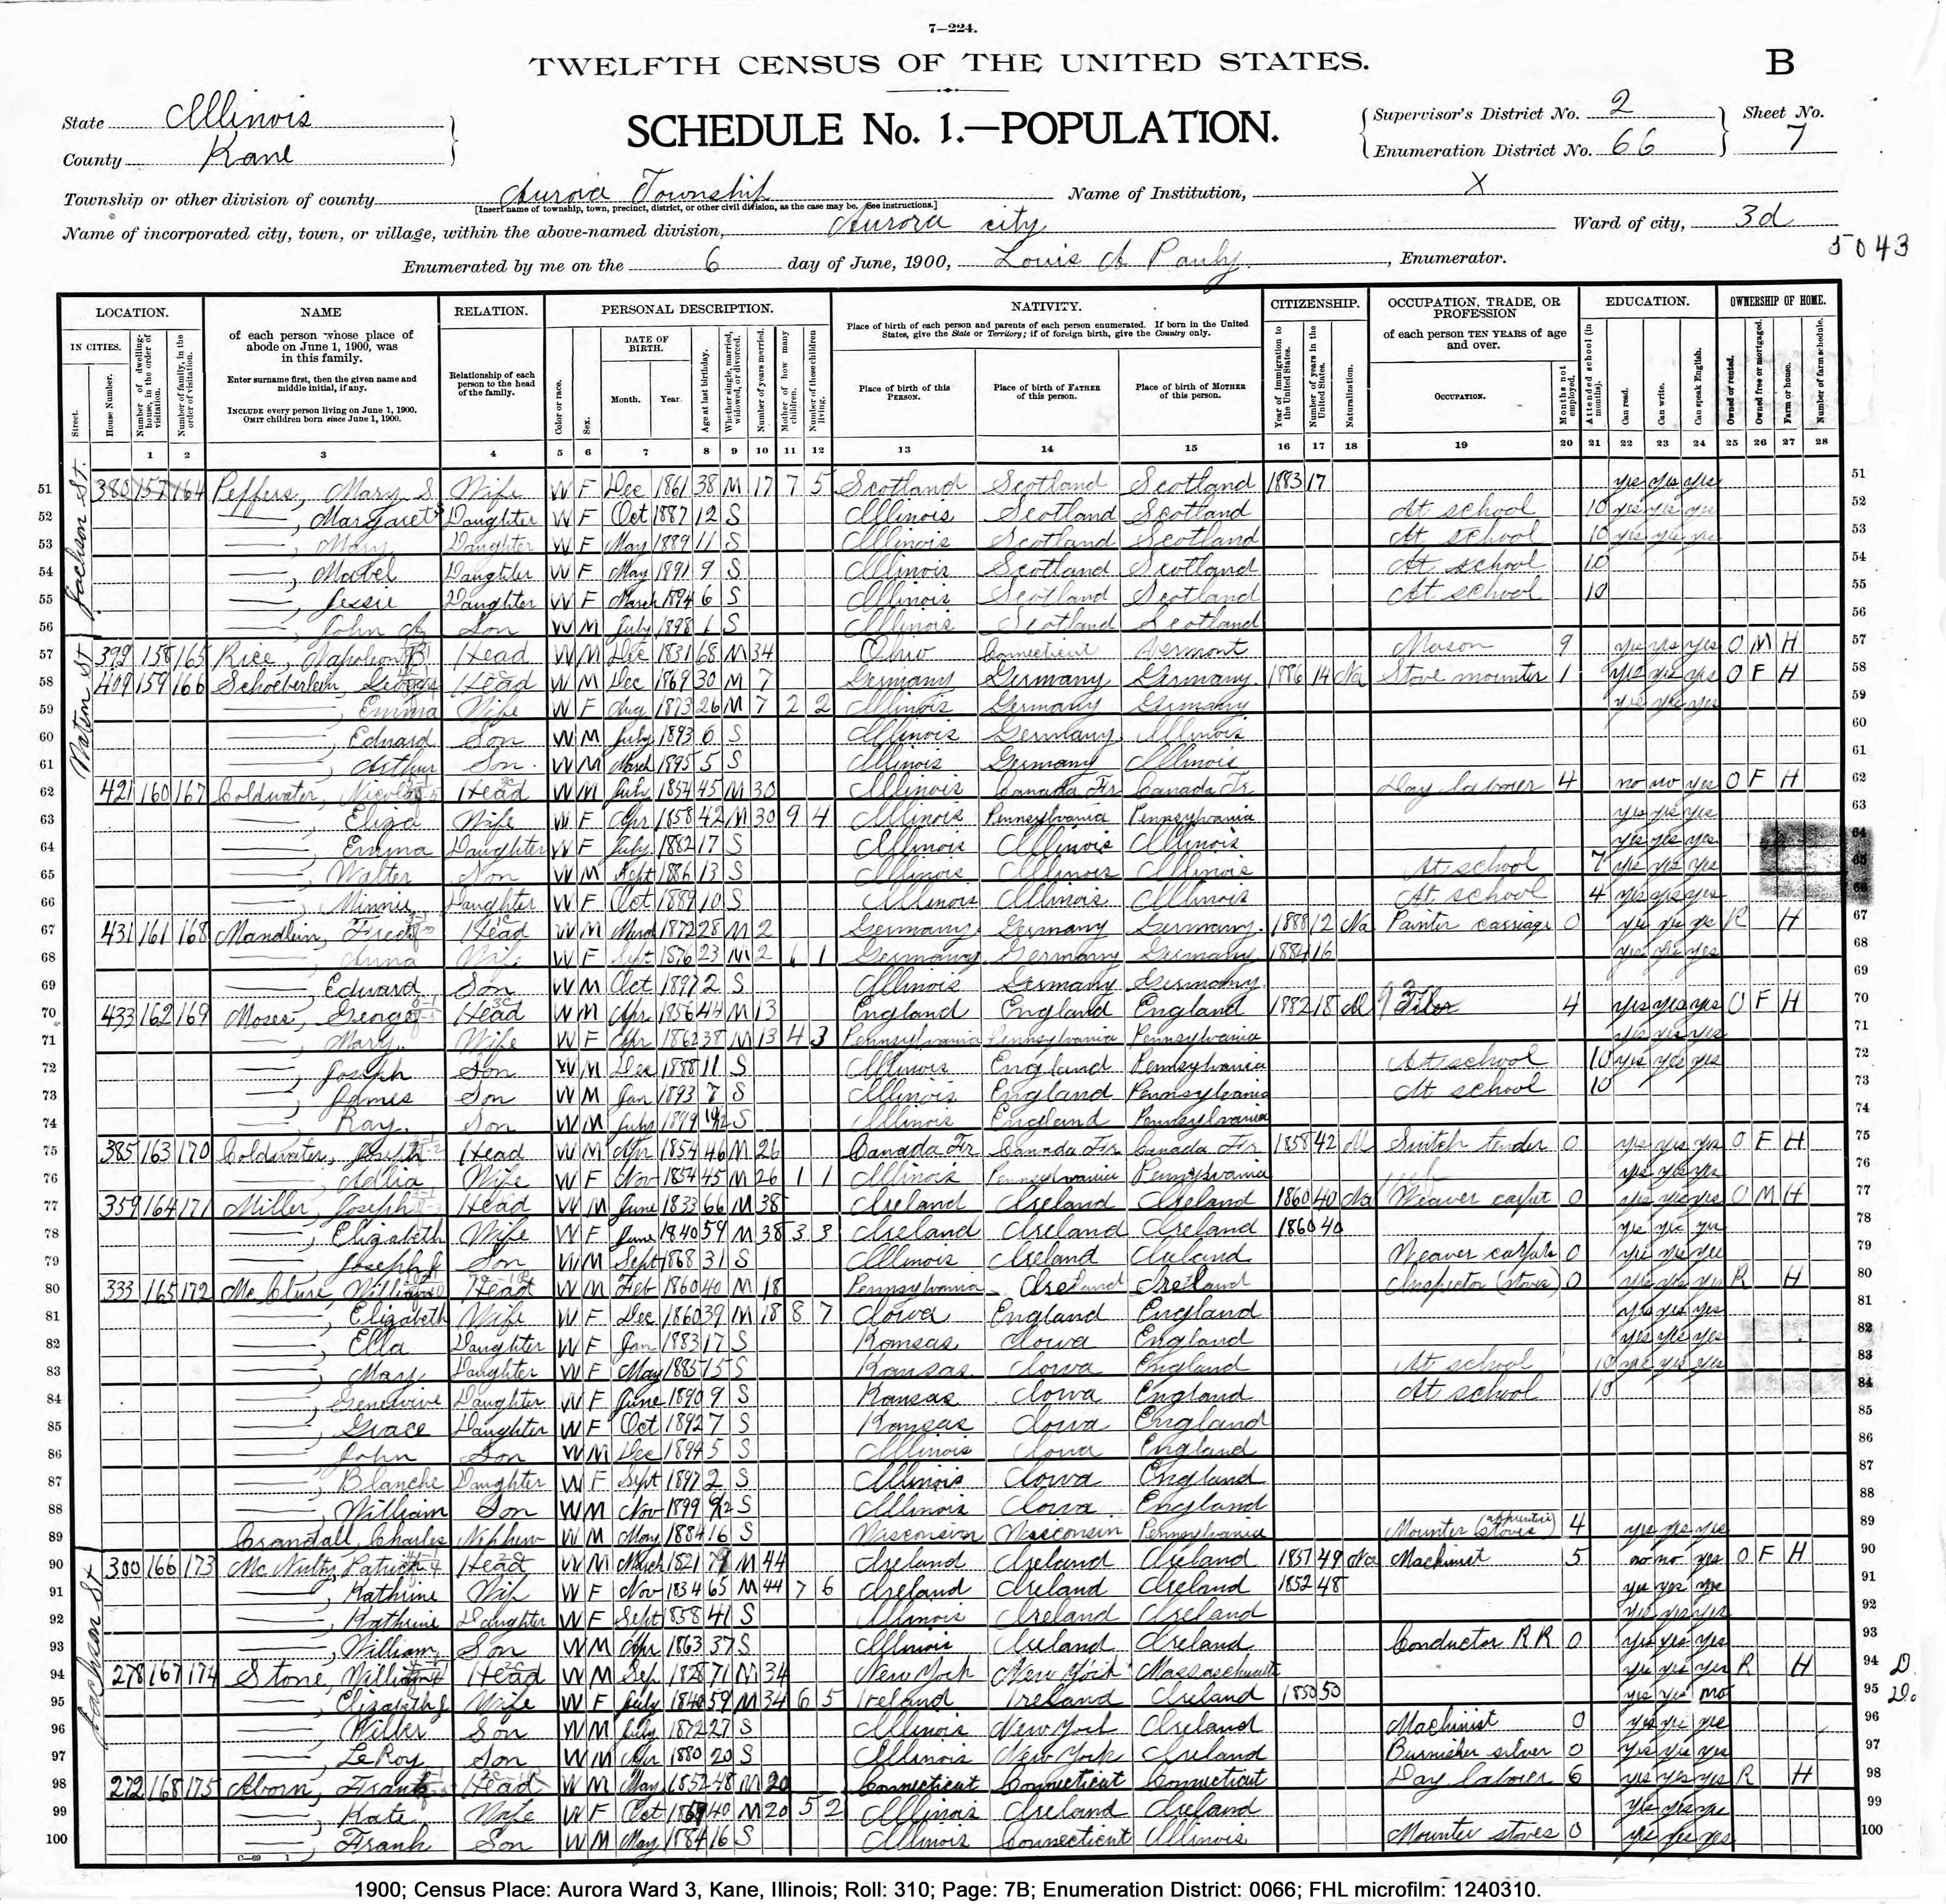 1900, Census Place, Aurora Ward 3, Kane, Illinois, Roll 310, Page 7B, Enumeration District 0066, FHL microfilm 1240310